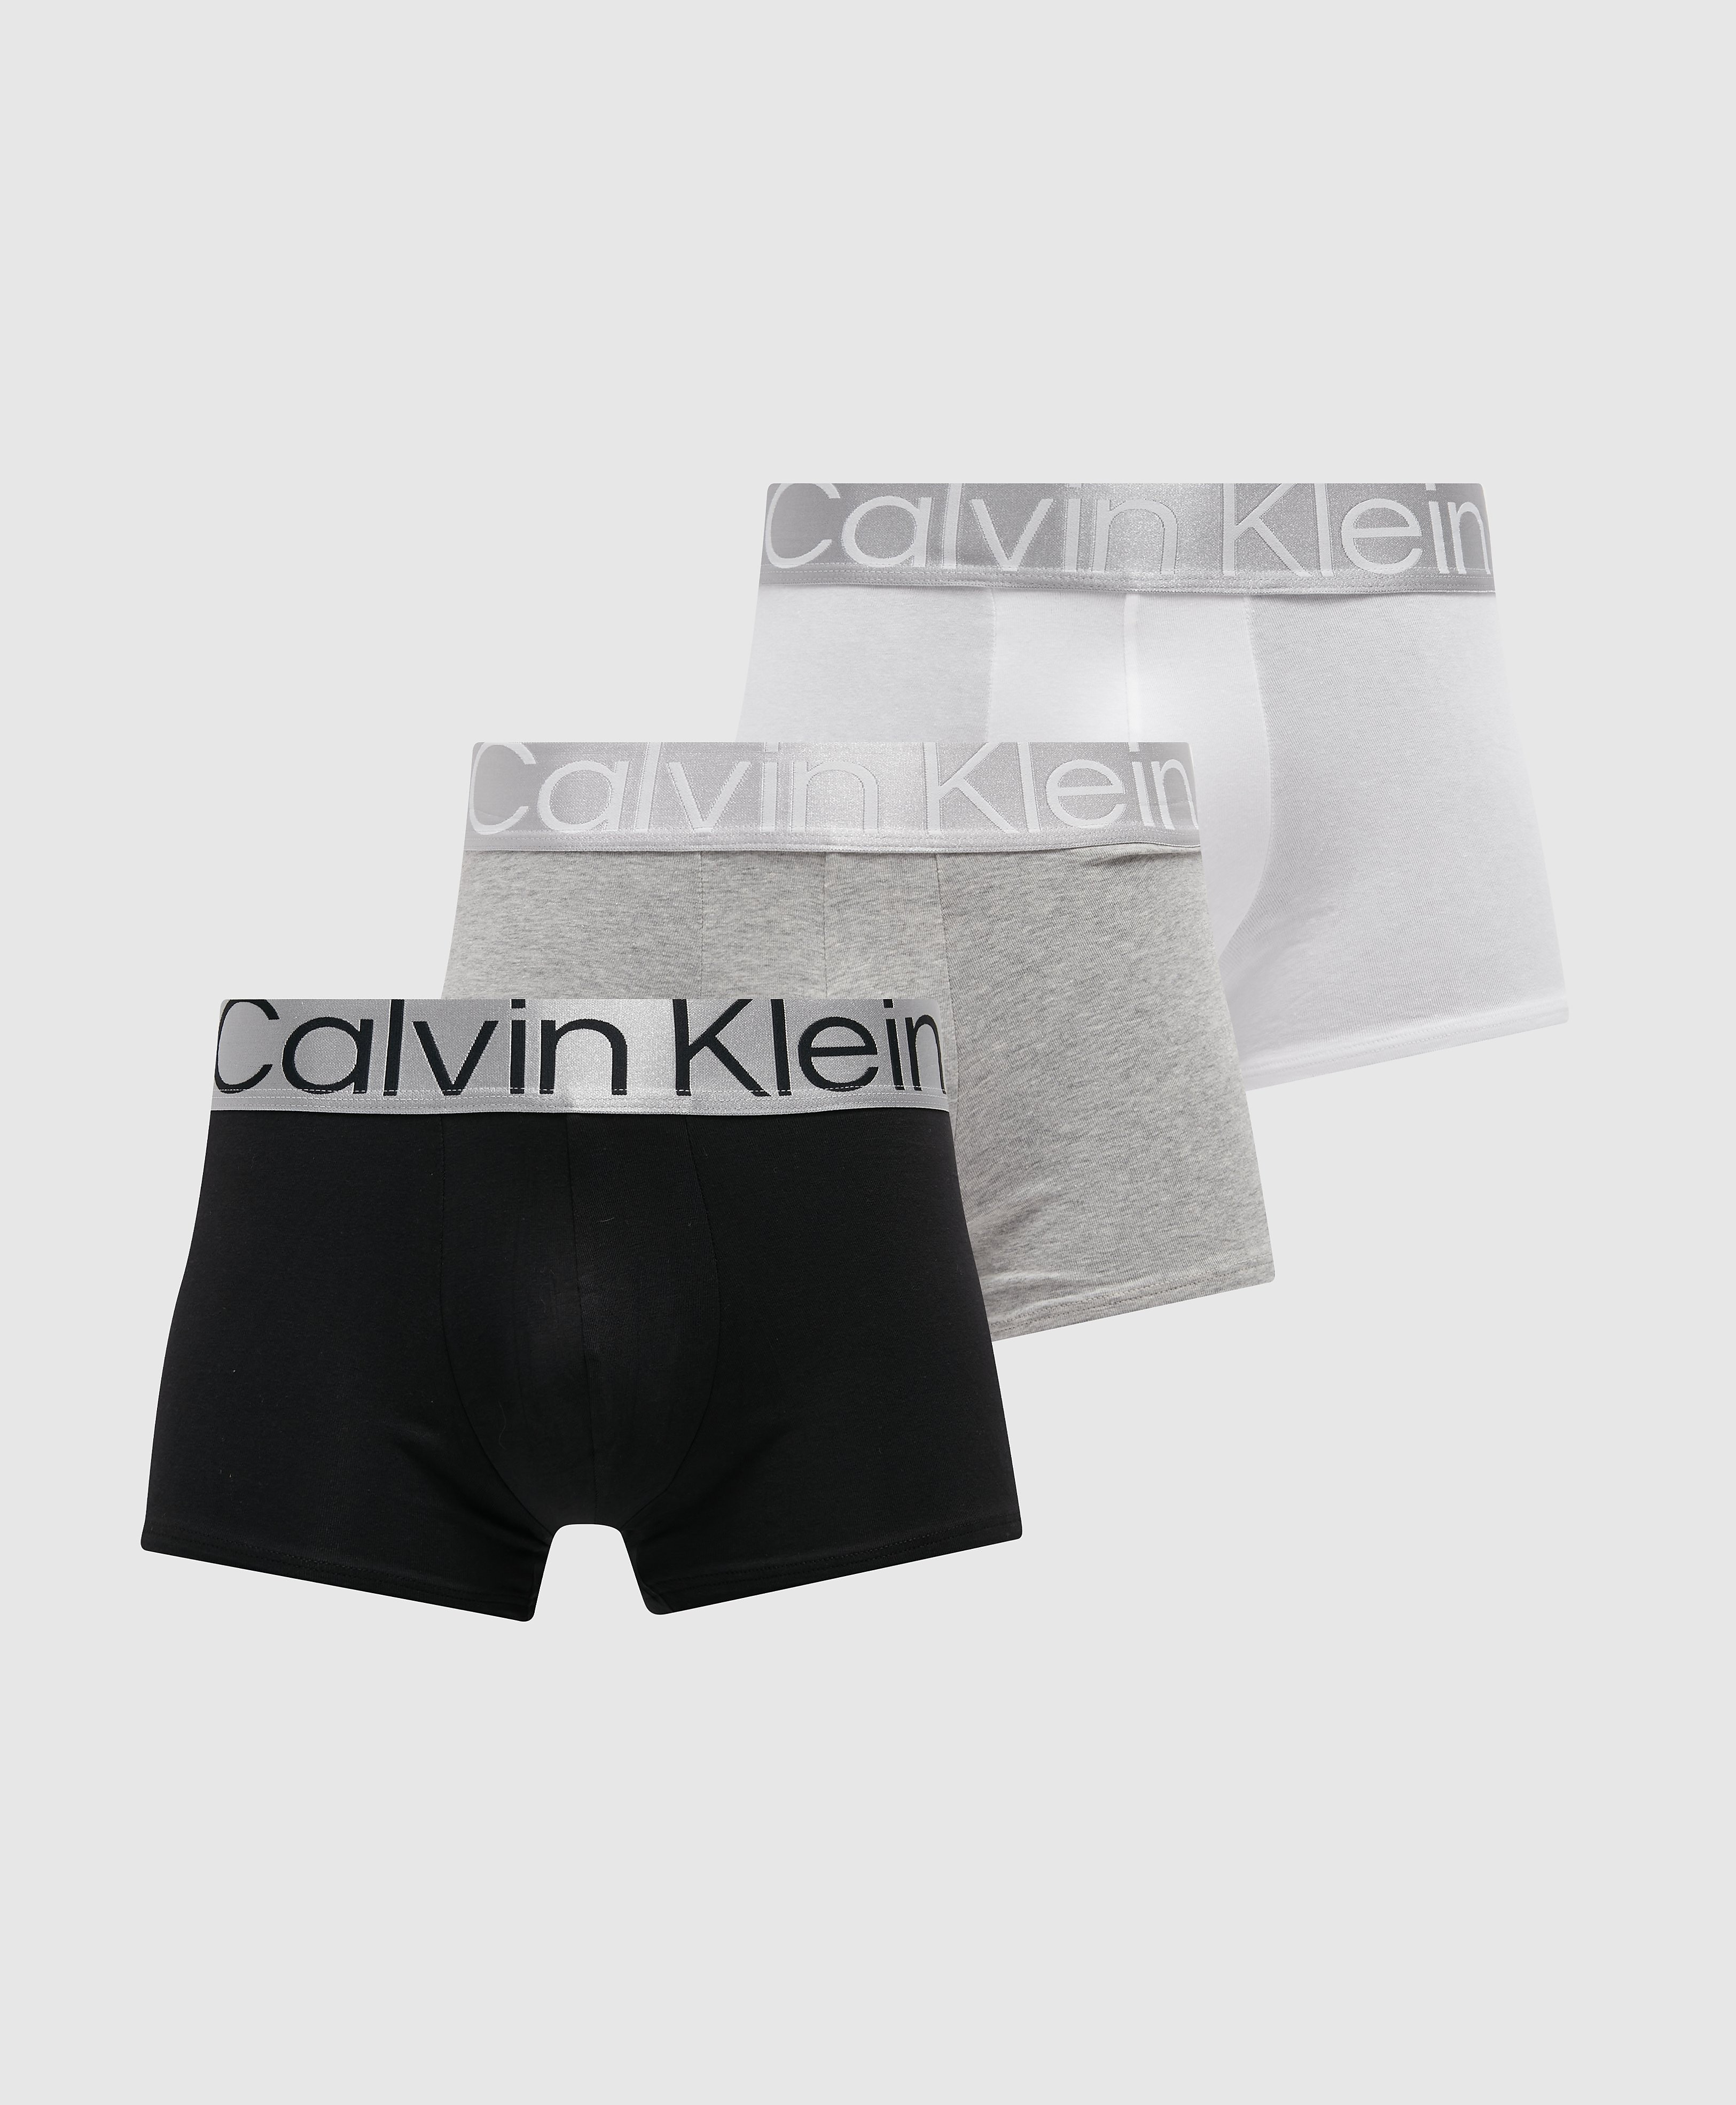 Calvin Klein Underwear Men's 3 Pack Steel Trunks - Multi/Black, Multi/Black